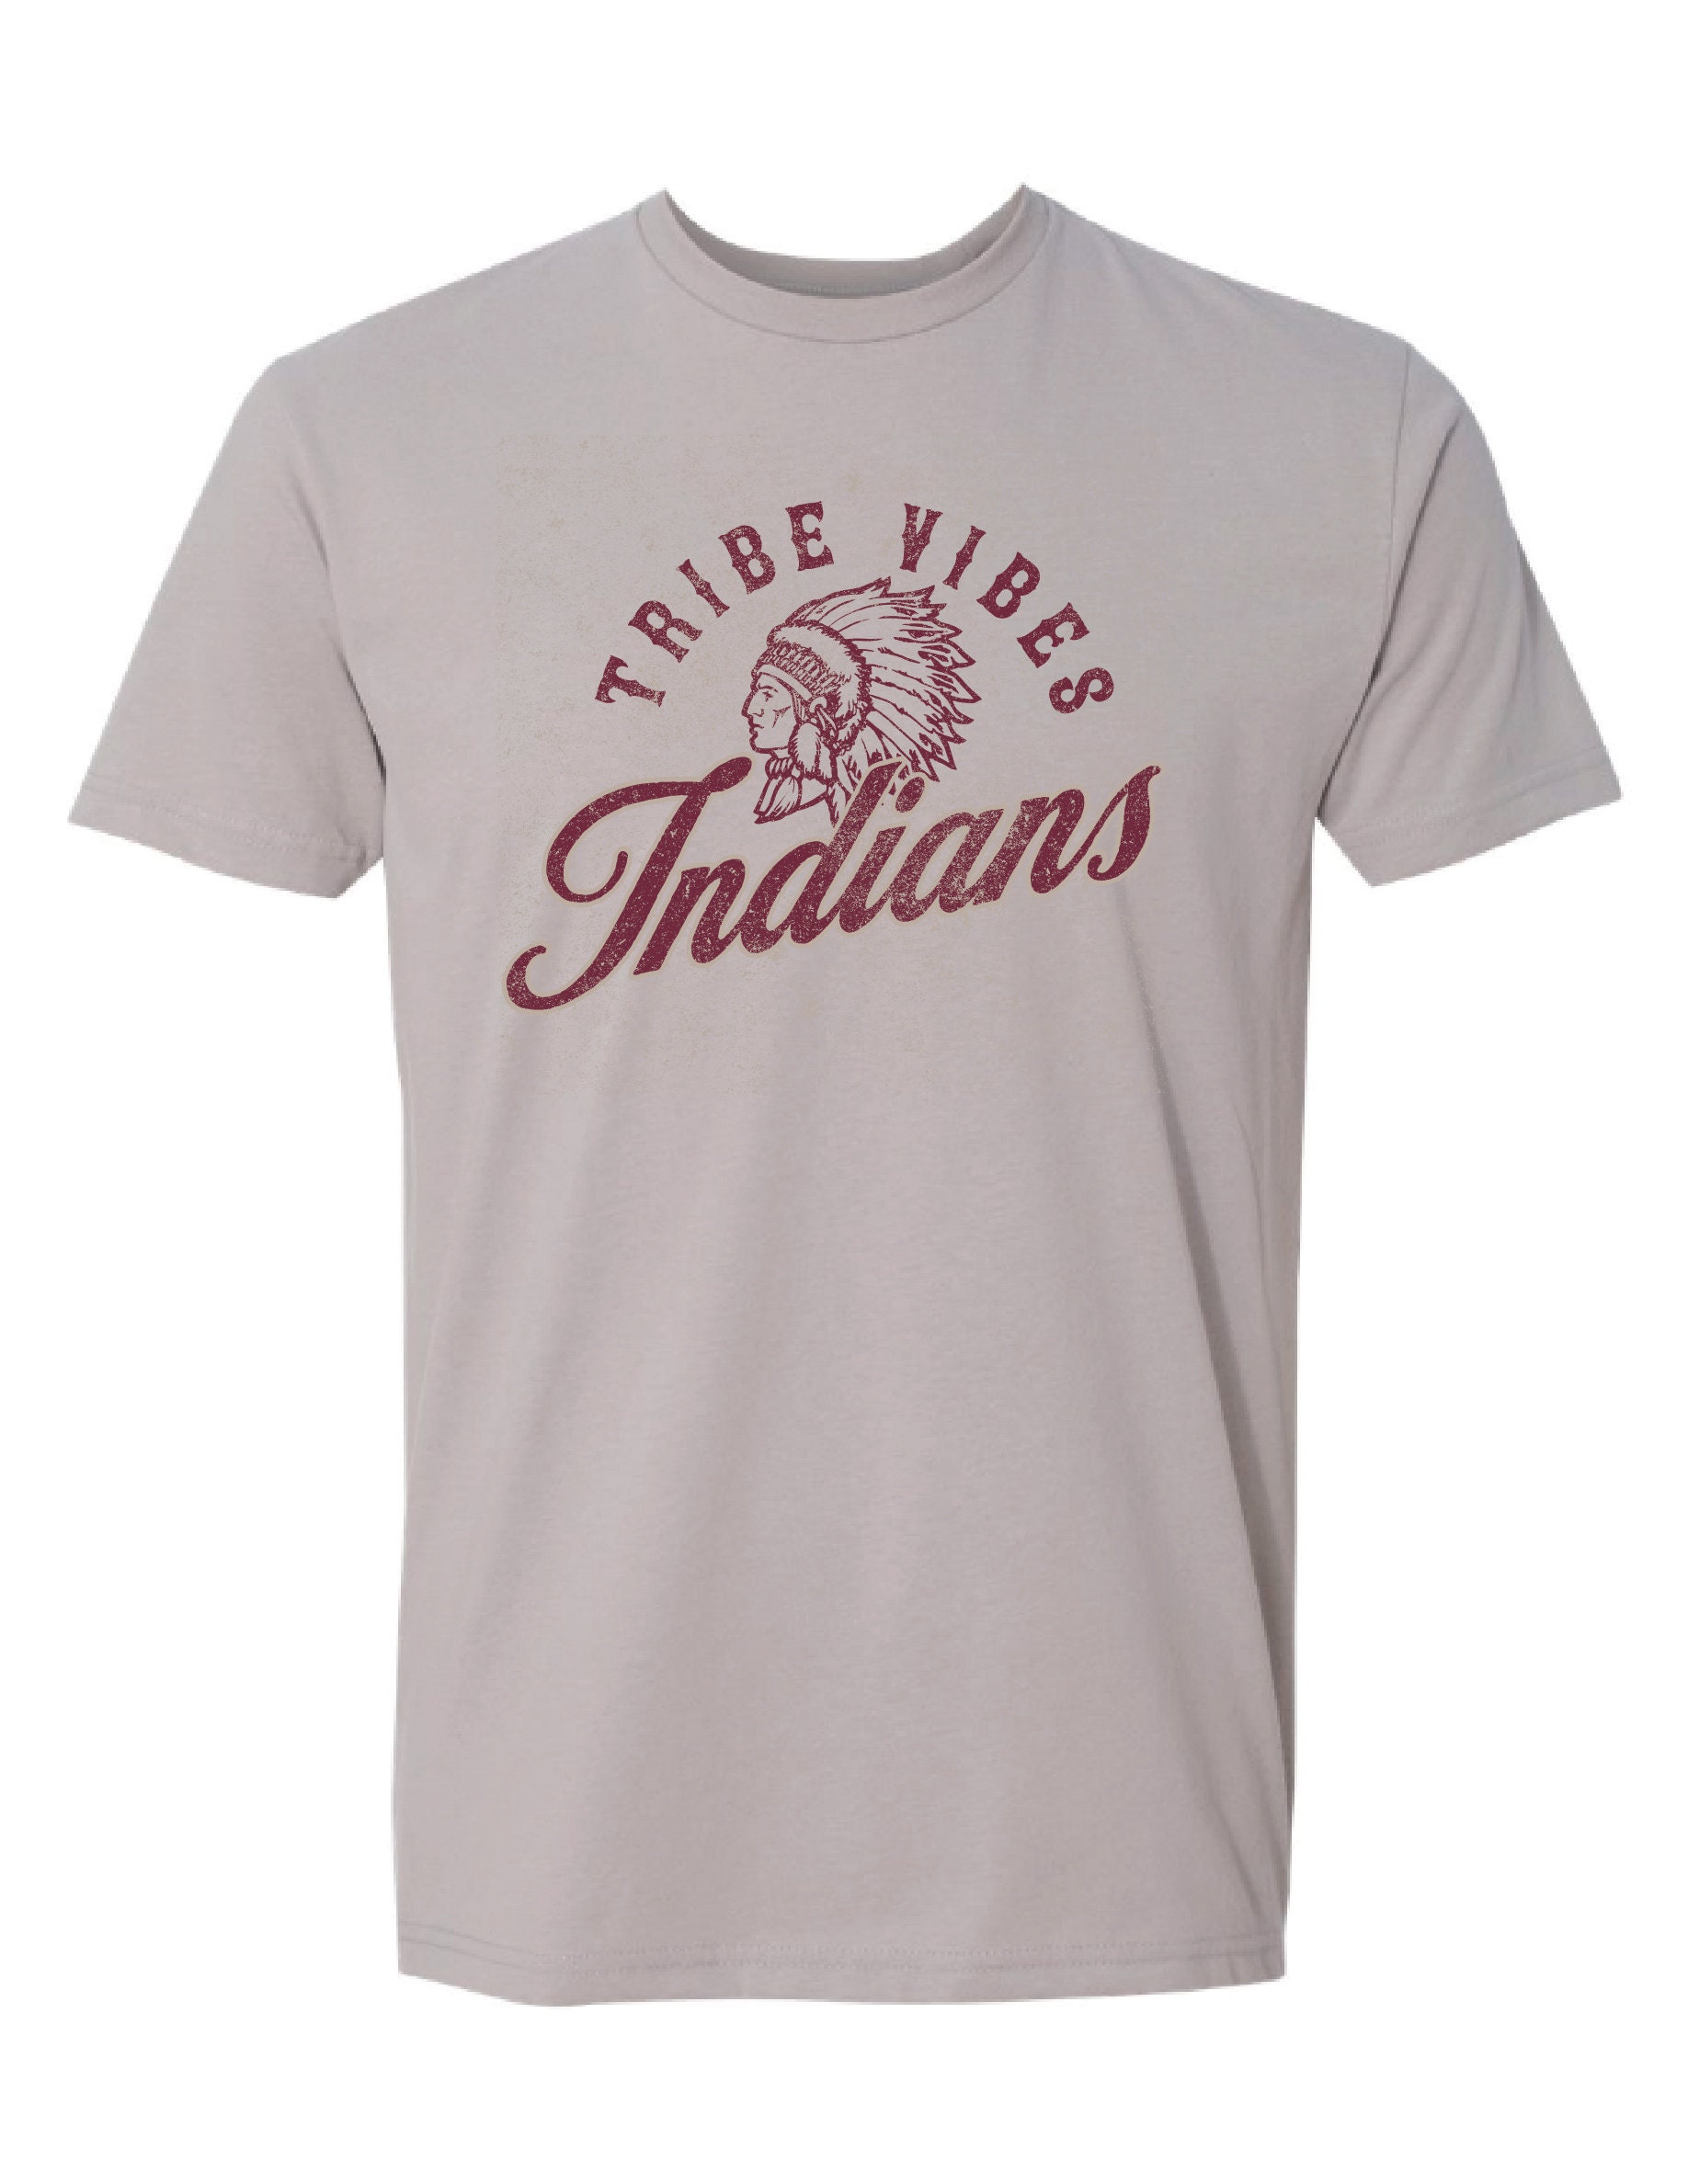 tribe vibes indians shirt, retro indian headdress t-shirt, vintage  distressed design, tan unisex sueded shirt, osage indians, tribal design